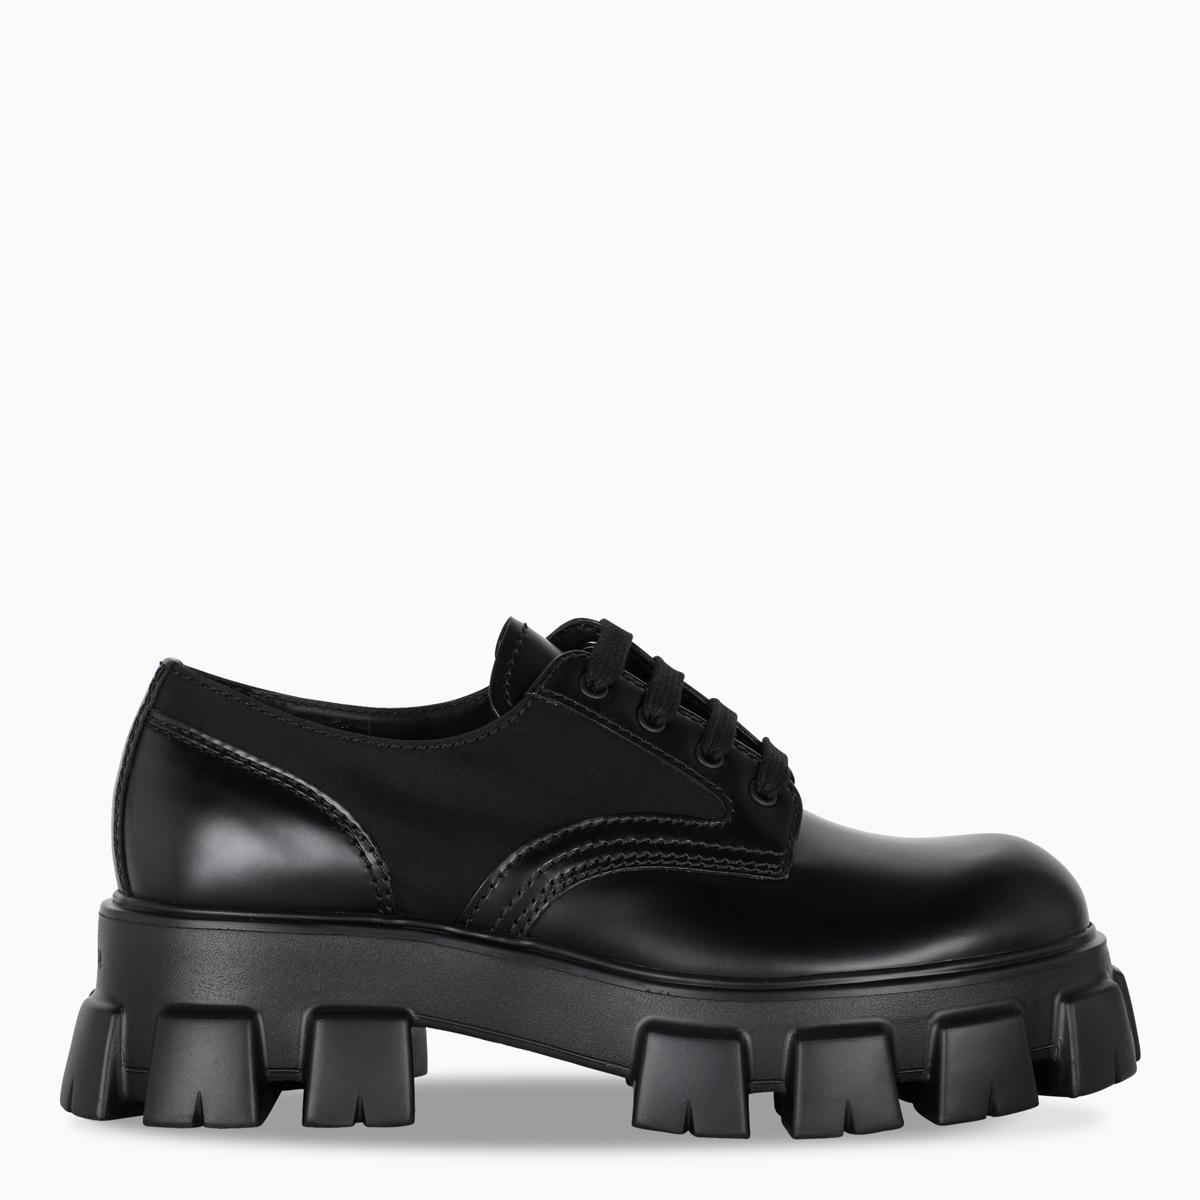 Prada Leather Black Monolith Shoes for Men - Lyst